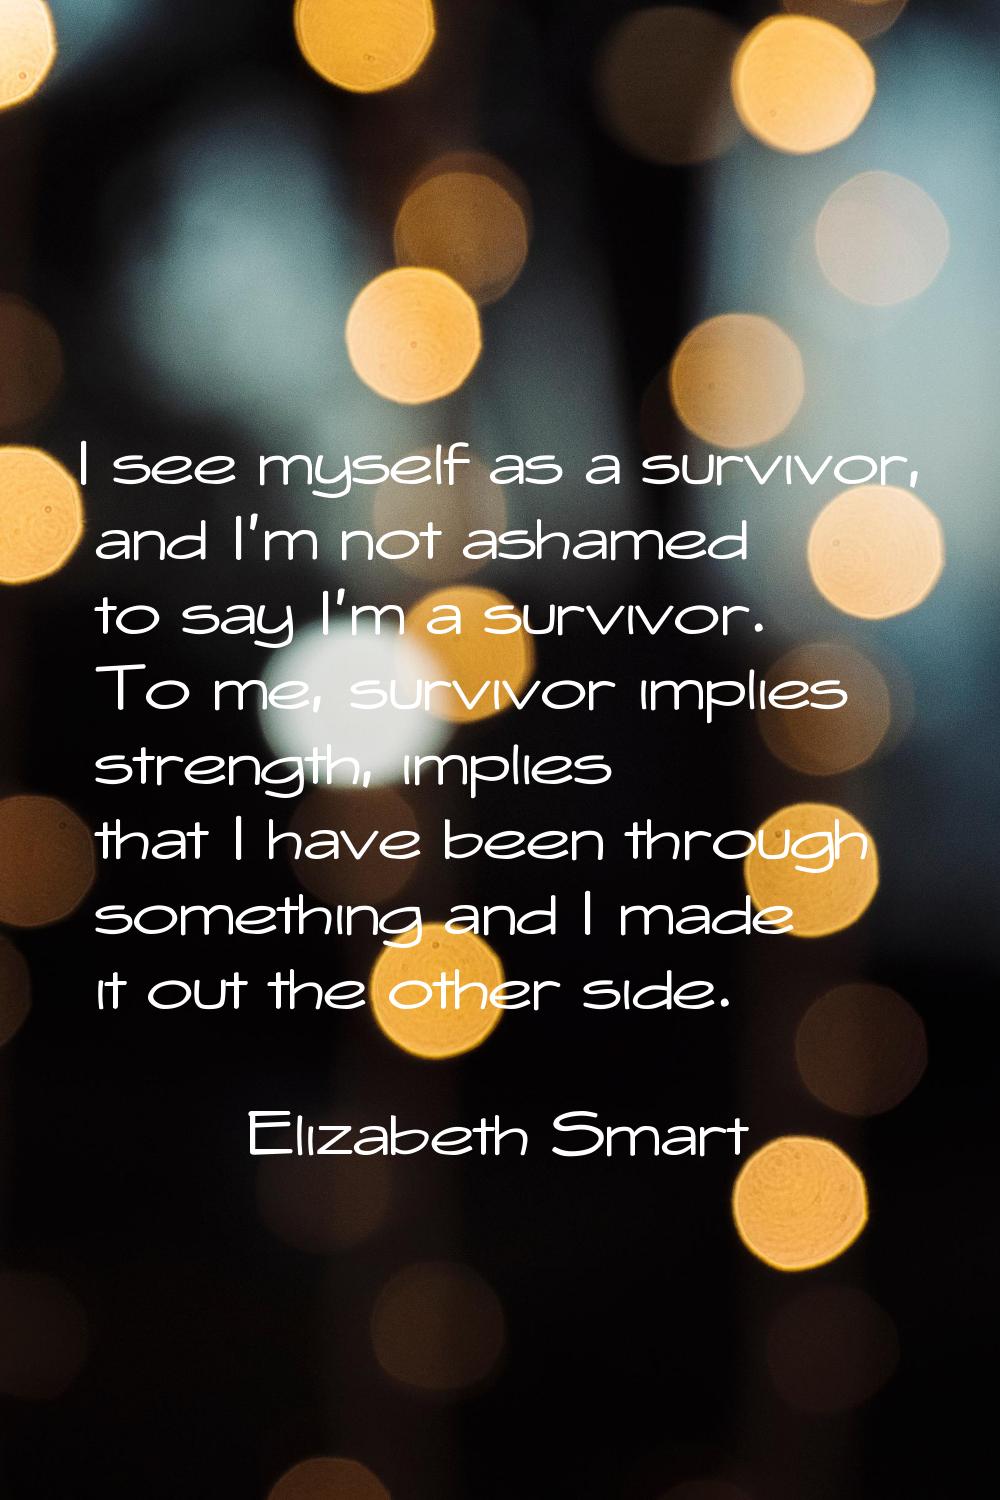 I see myself as a survivor, and I'm not ashamed to say I'm a survivor. To me, survivor implies stre